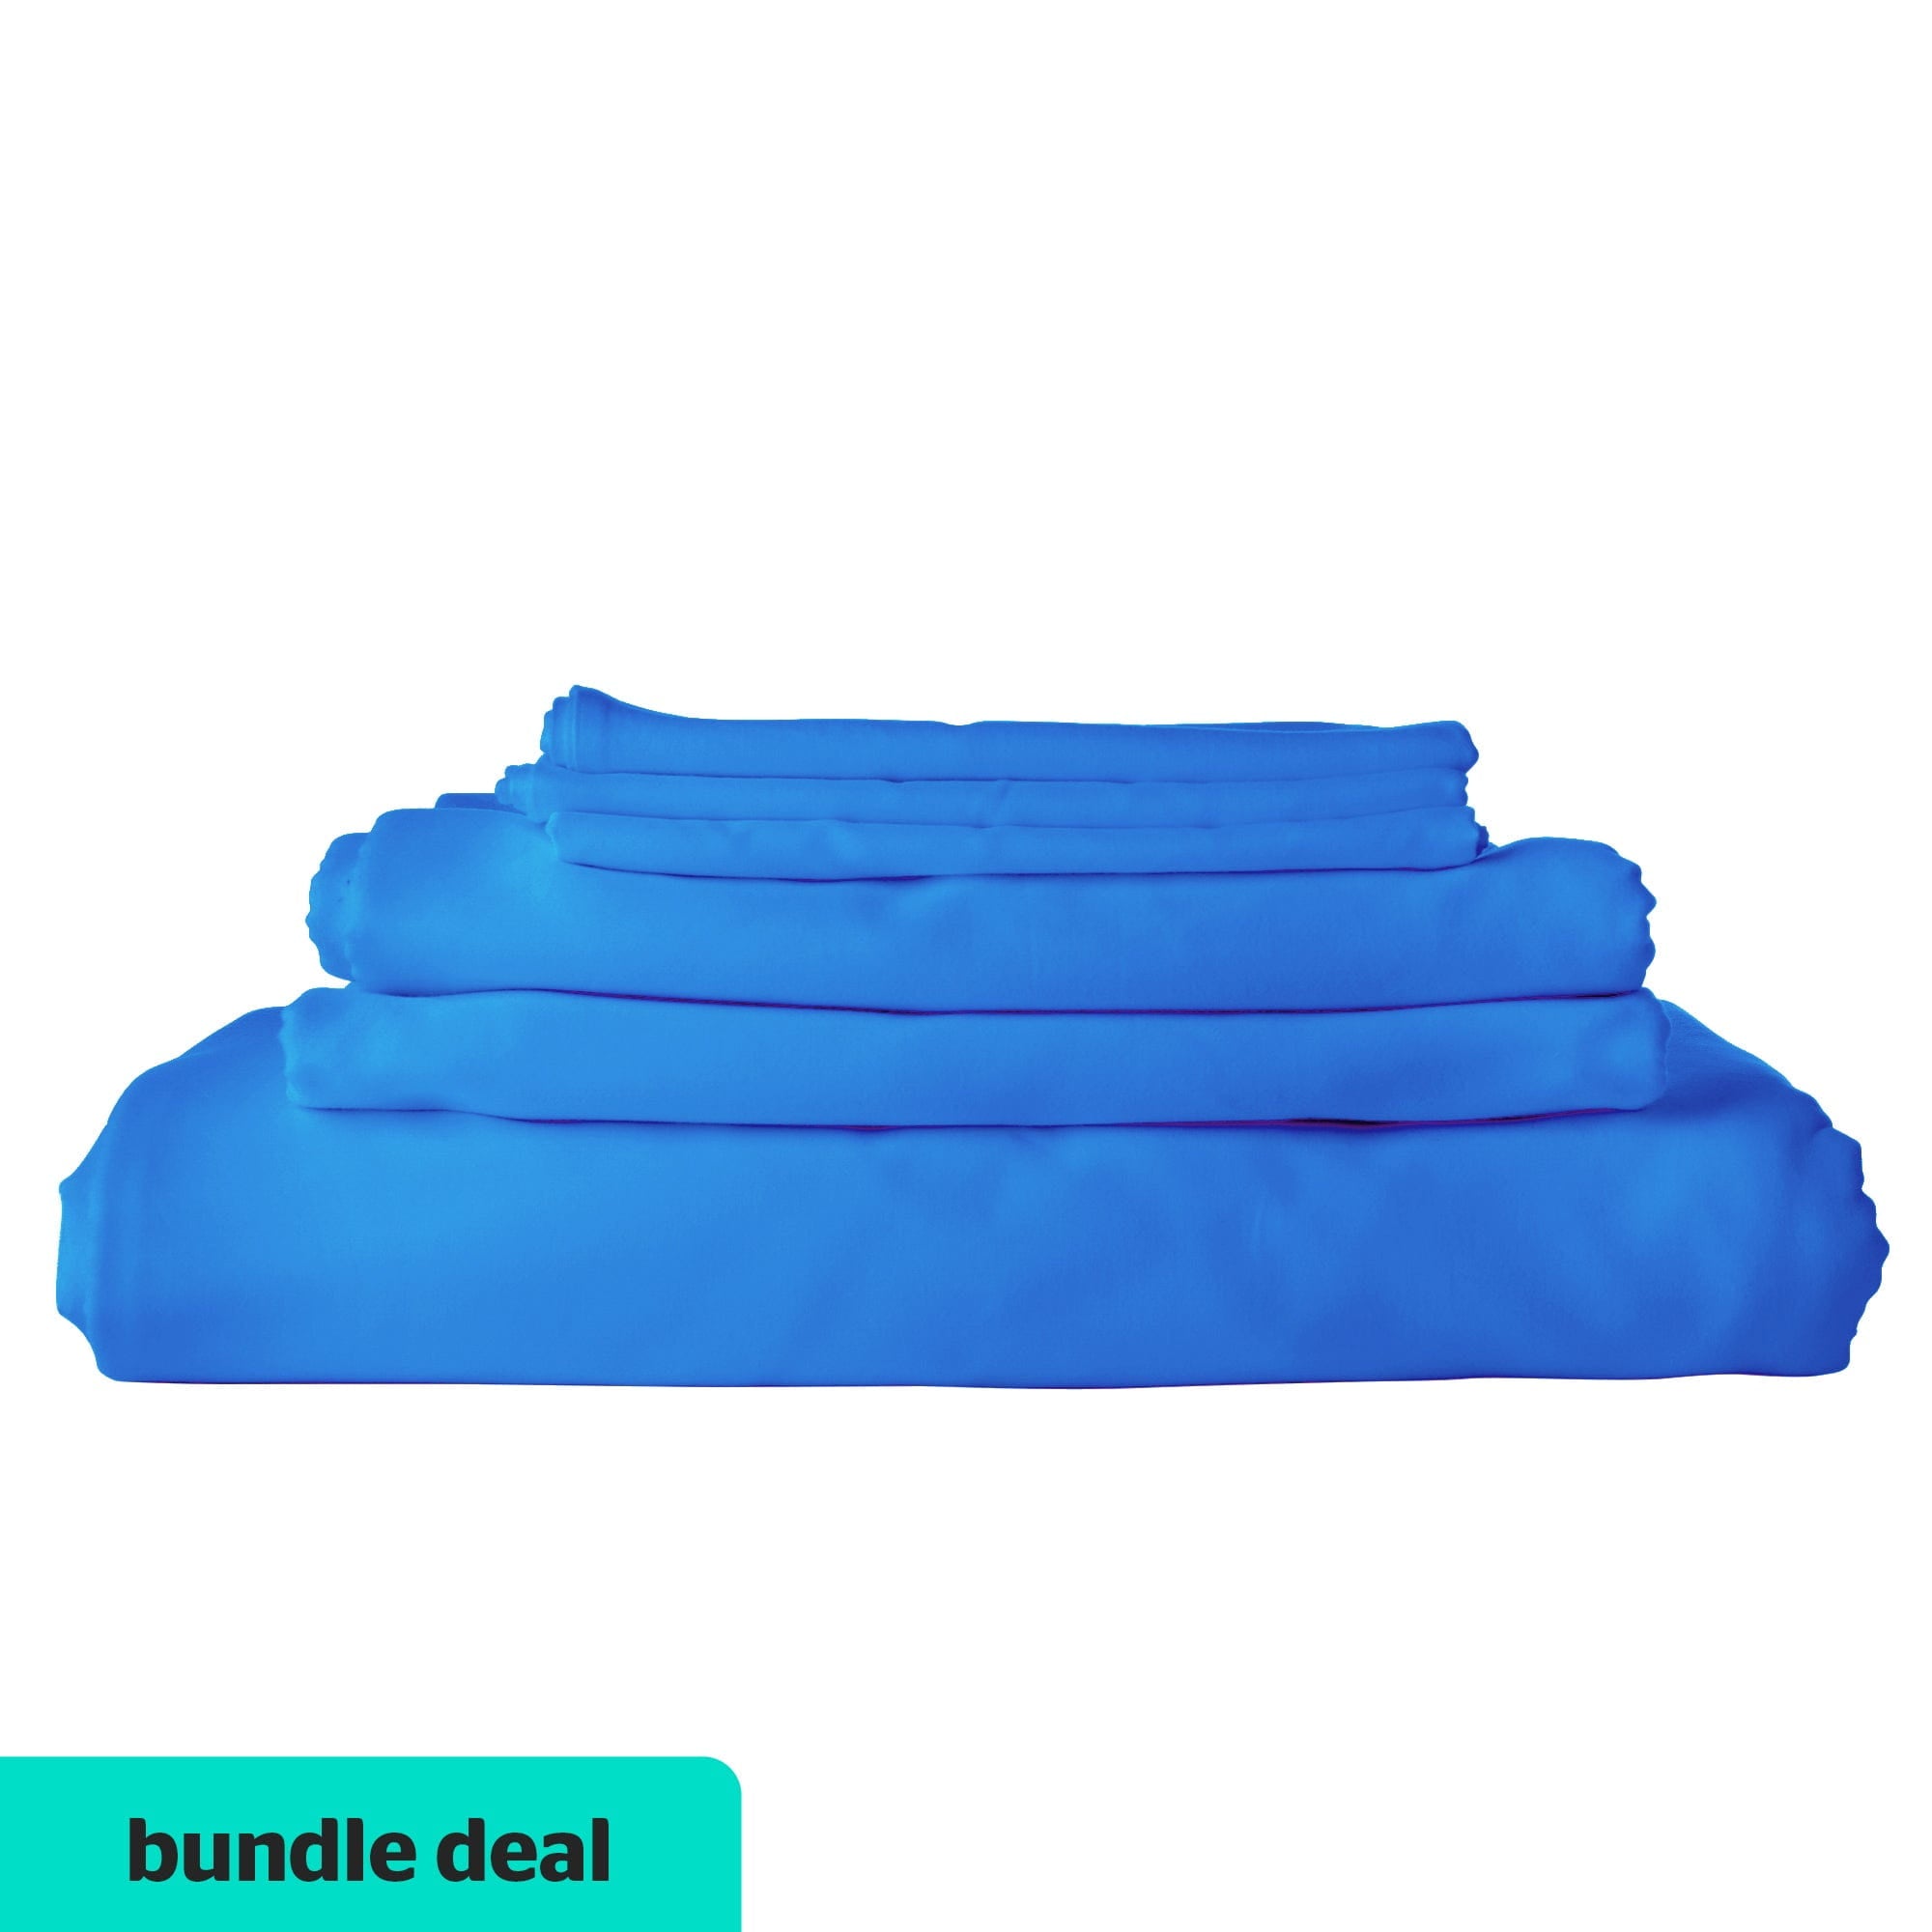 Essential Cotton Sateen Coloured Bed Linen Value Set